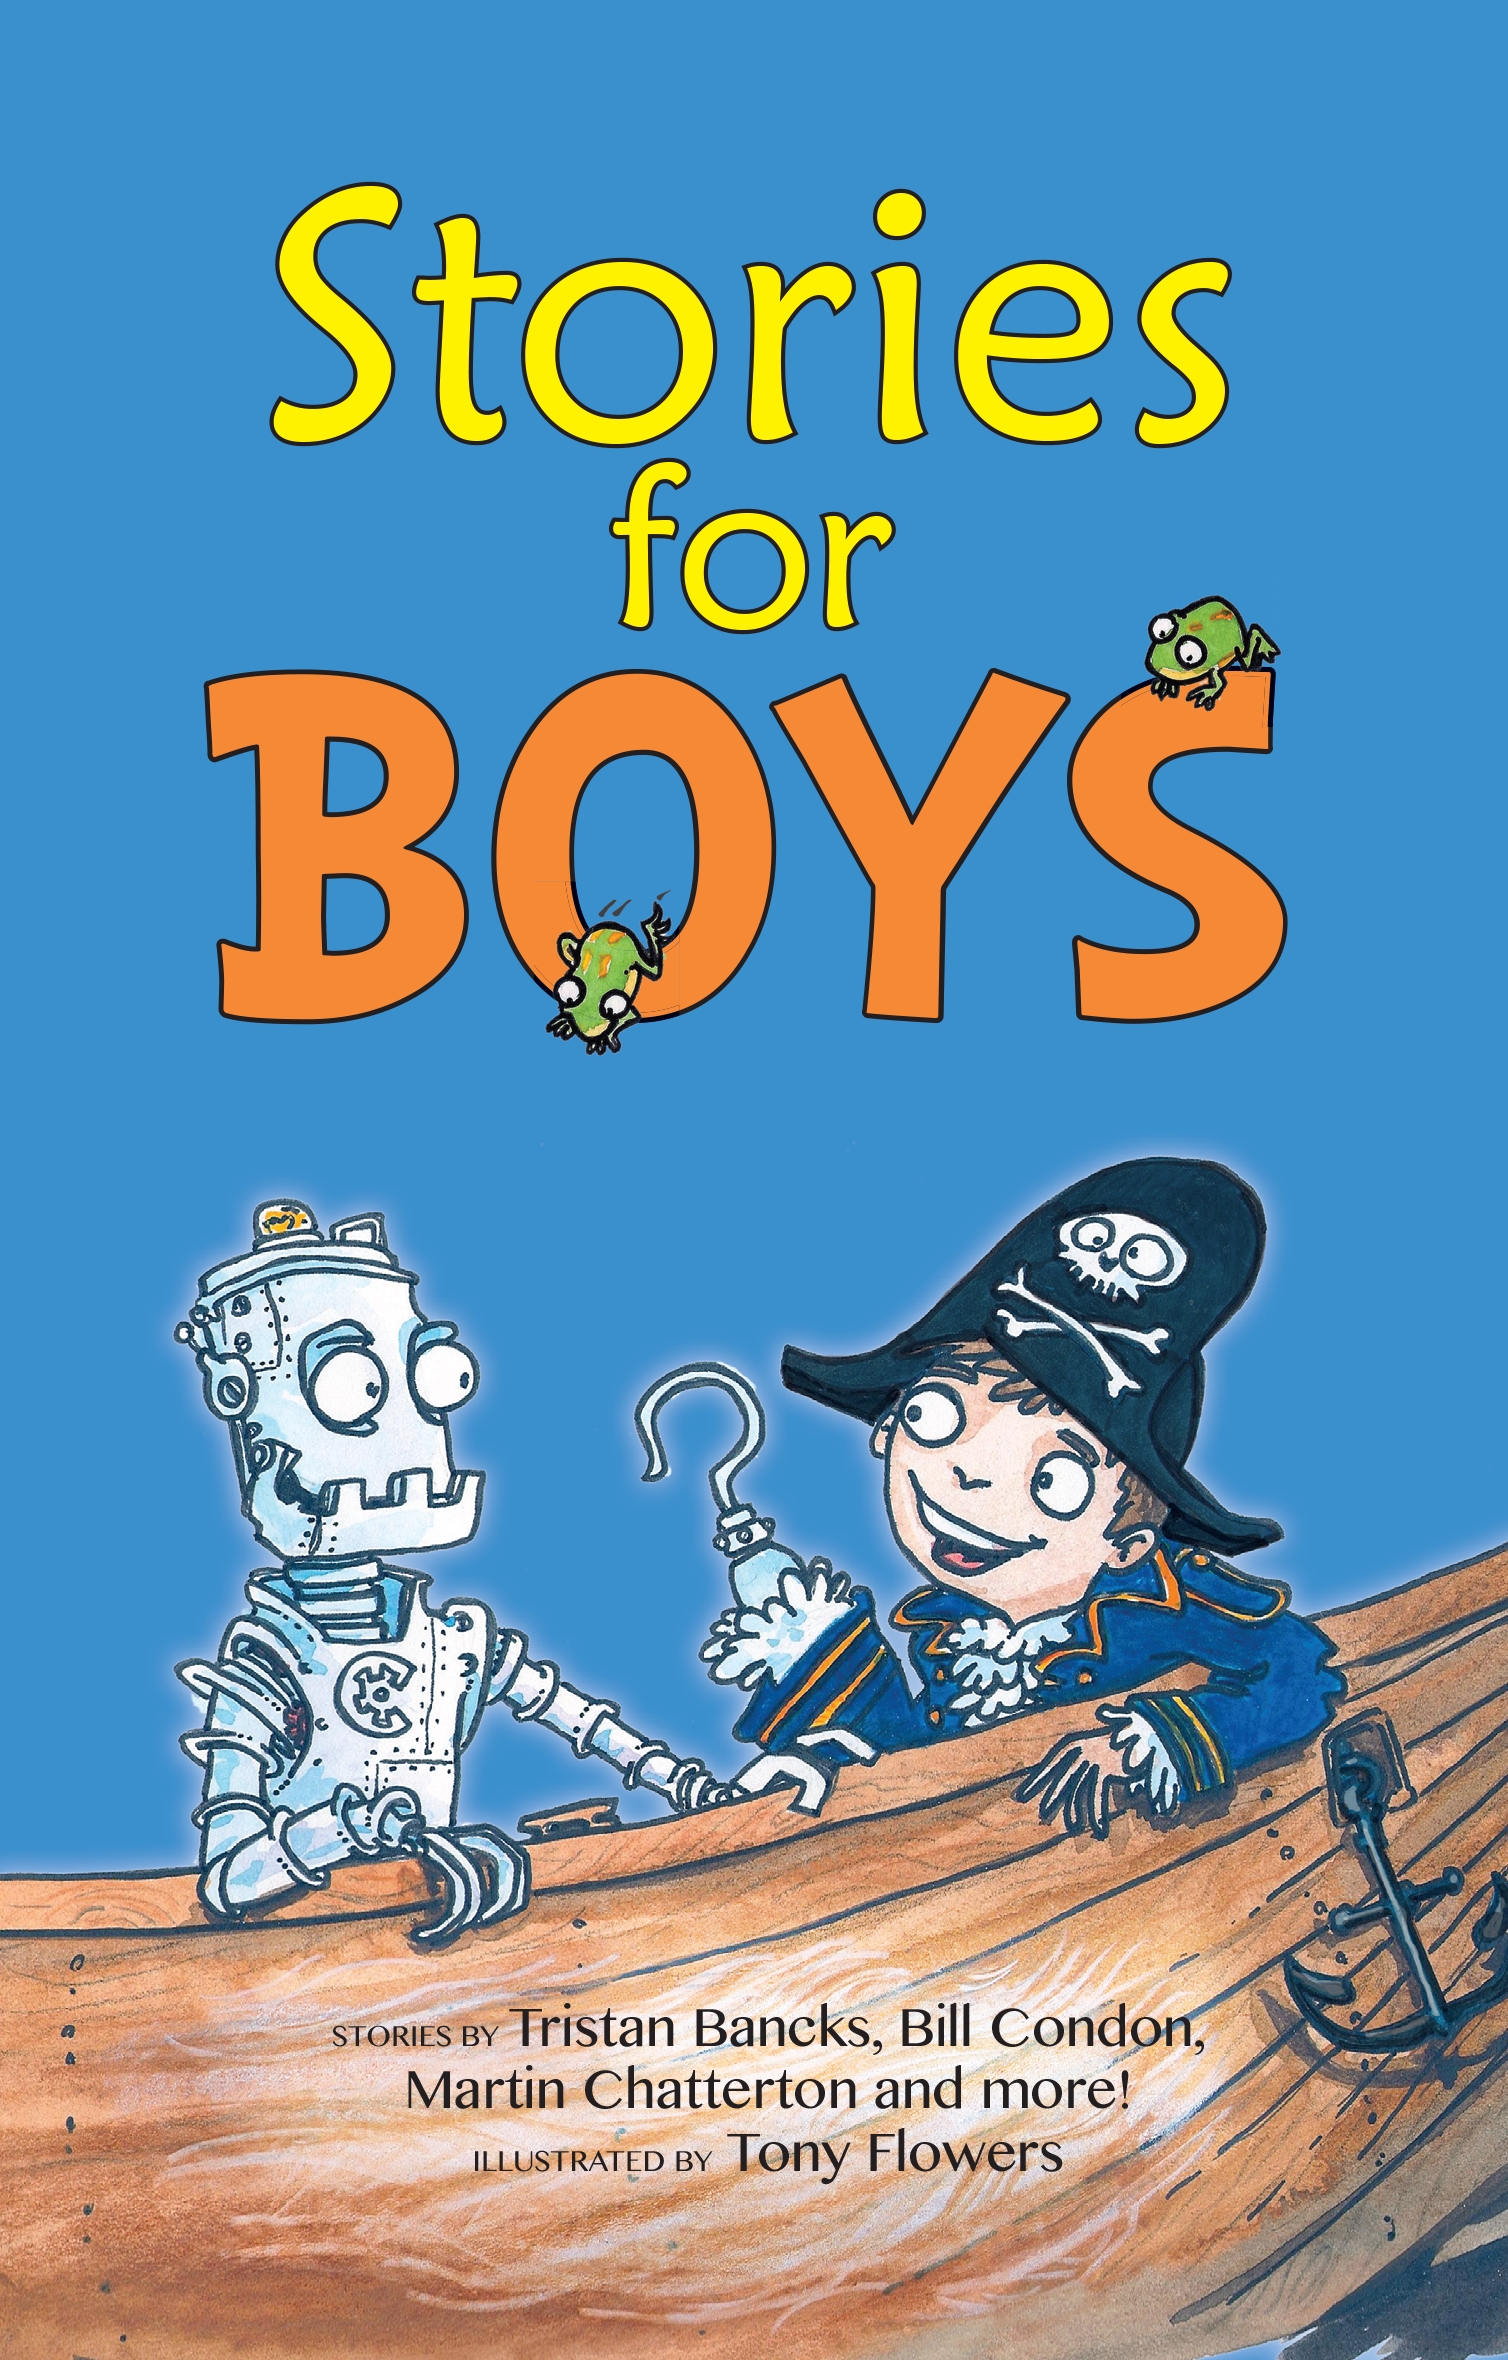 Adventure story writing. Stories of Adventure book for boys. Boys will be boys книга1993. Boys will be boys книга.